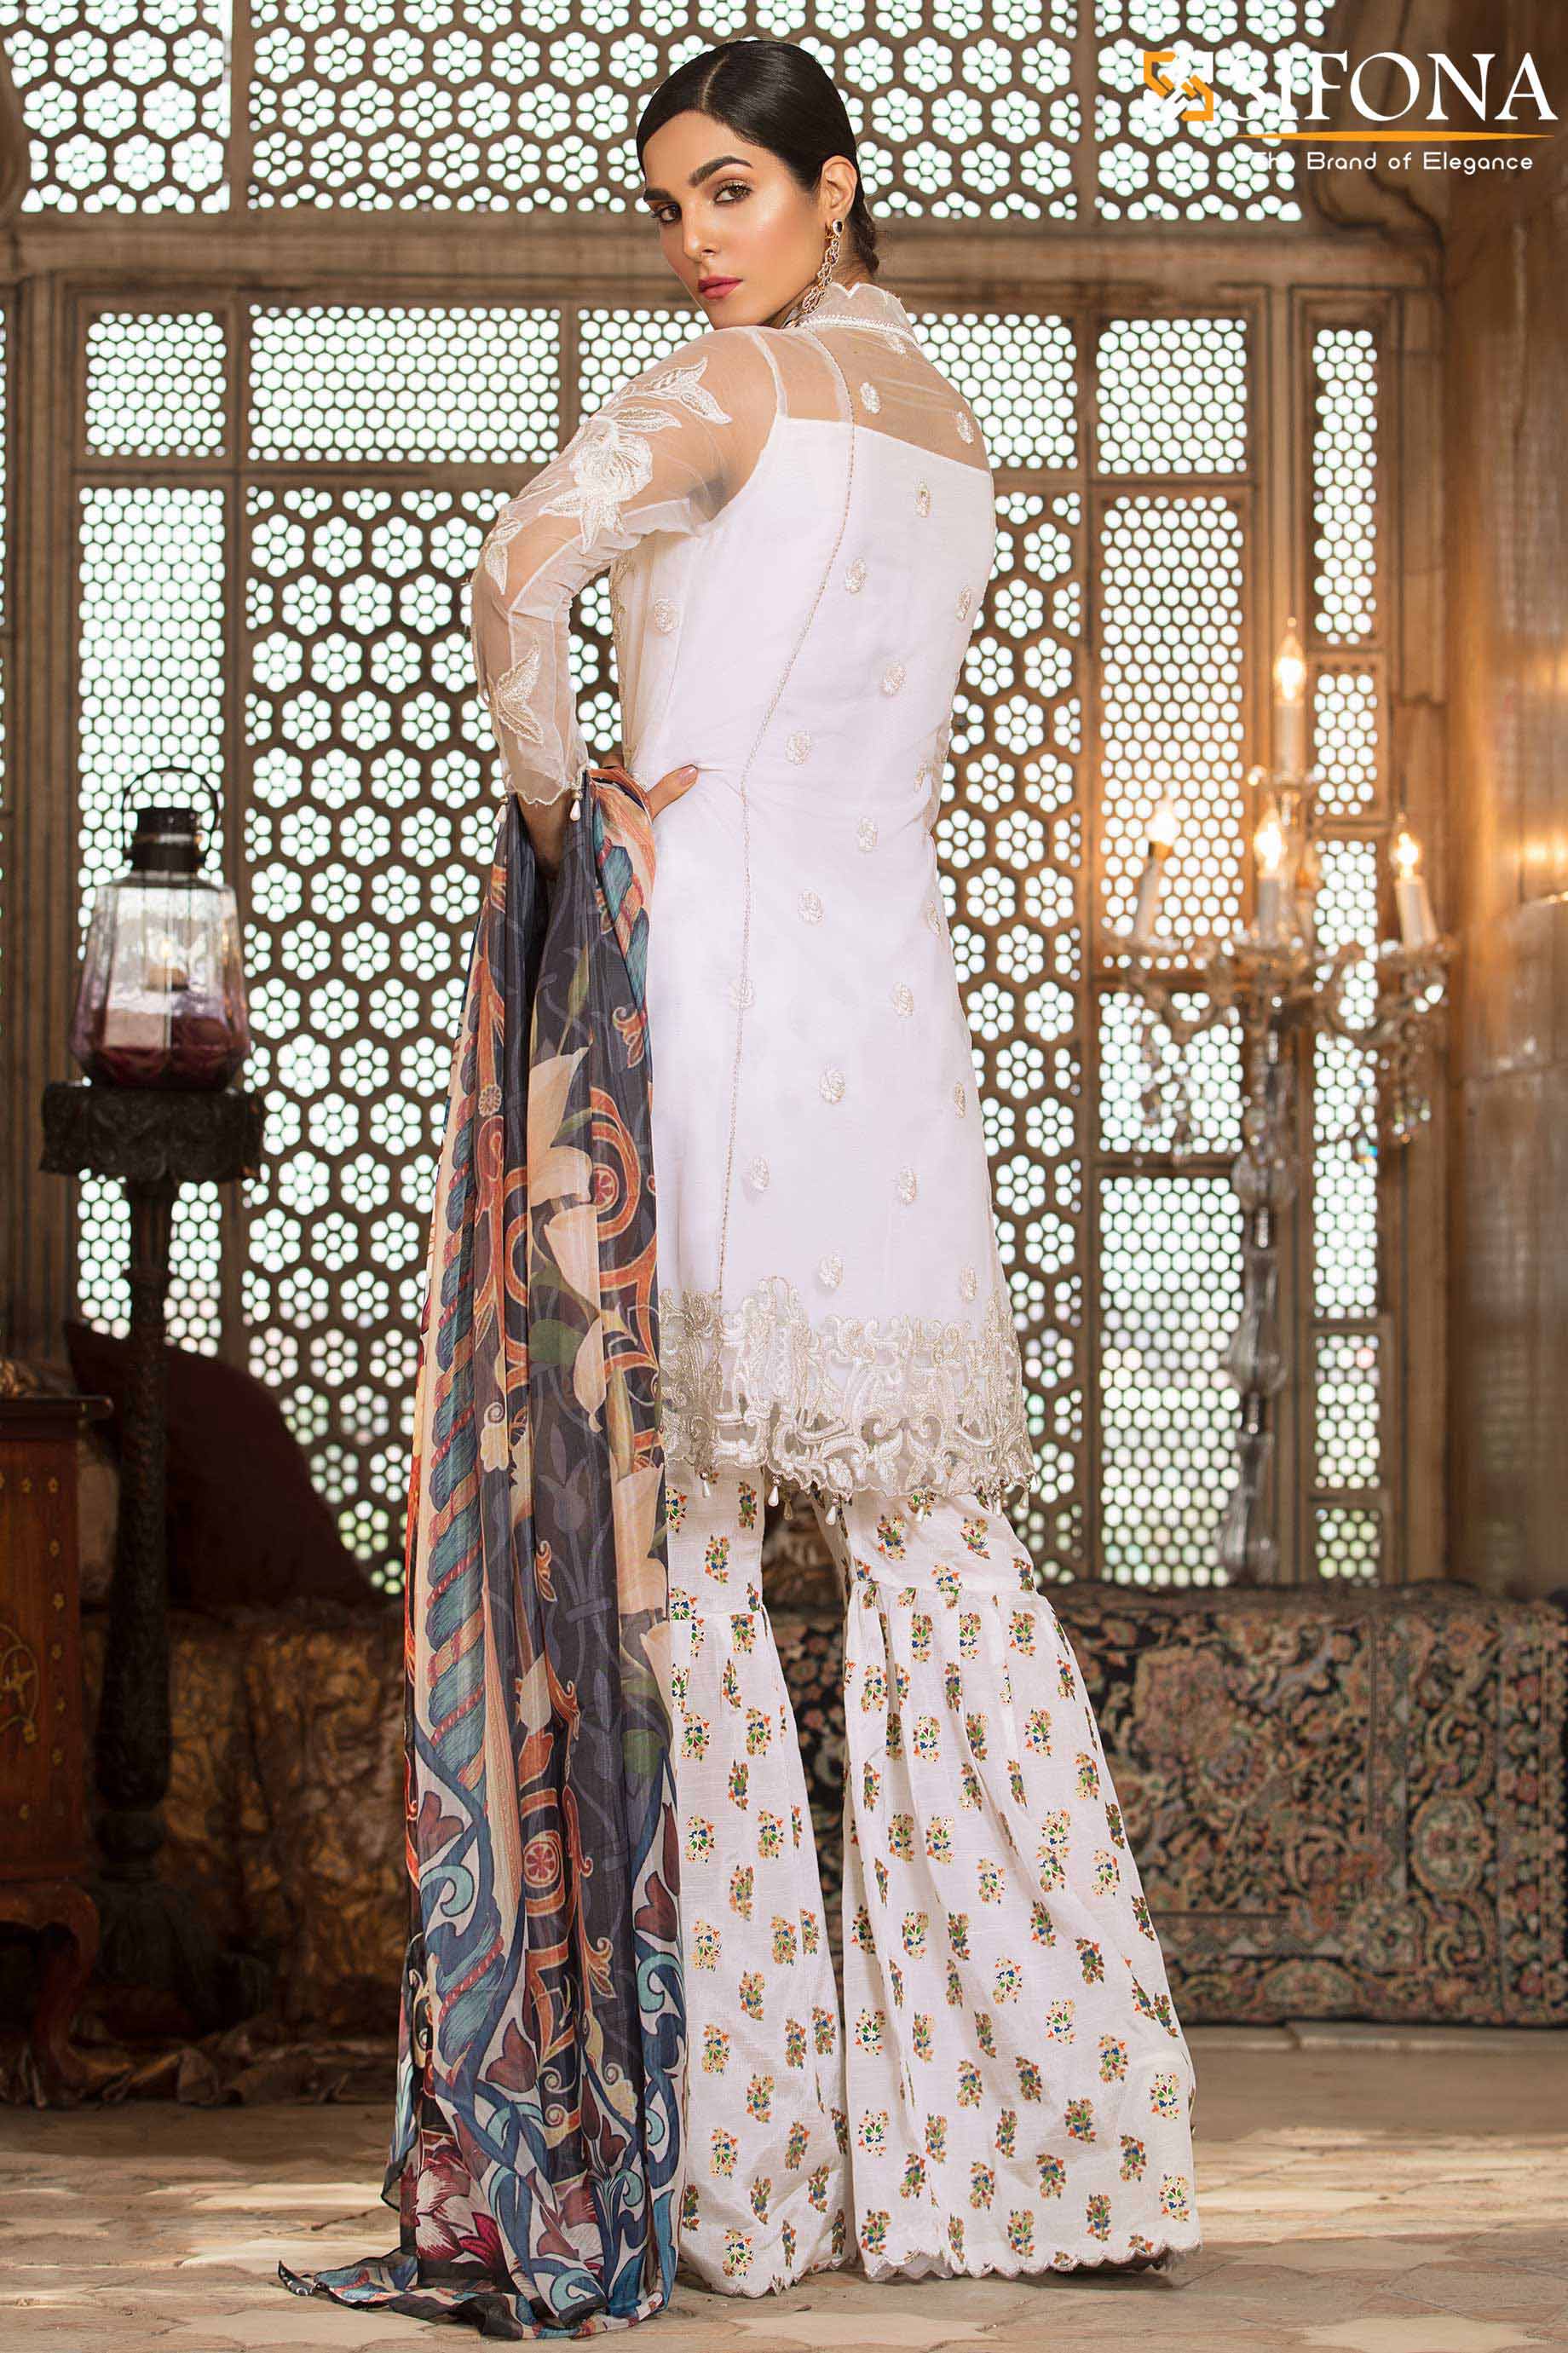 Buy this pretty white Pakistani semi formal dress by Sifona